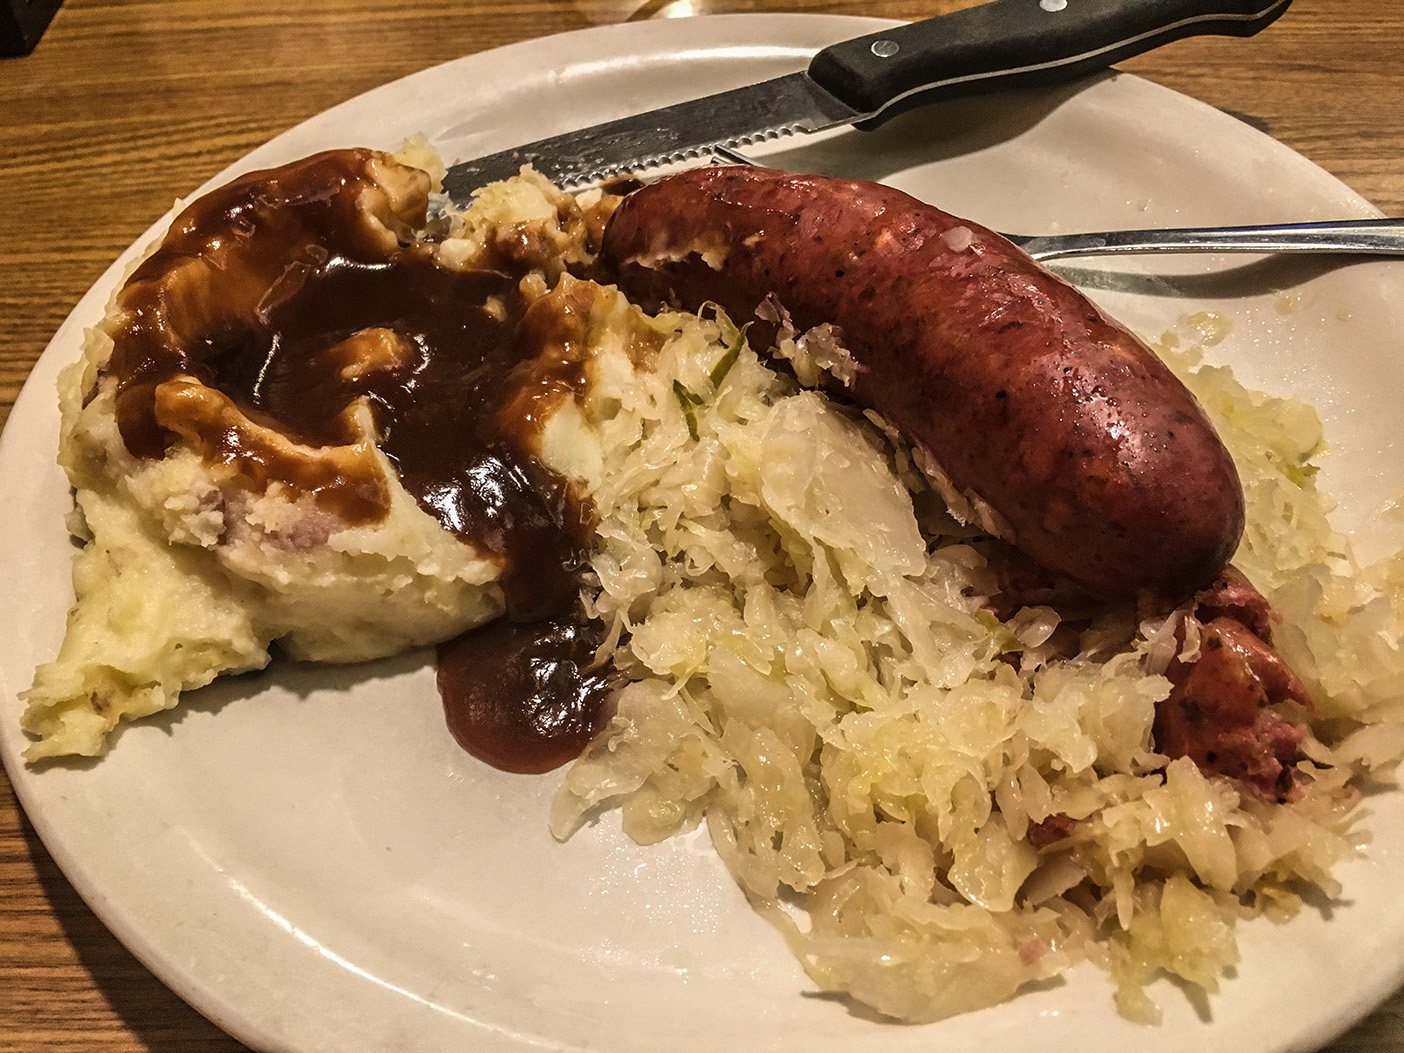 A bratwurst, sauerkraut, and potatoes birthday dinner.